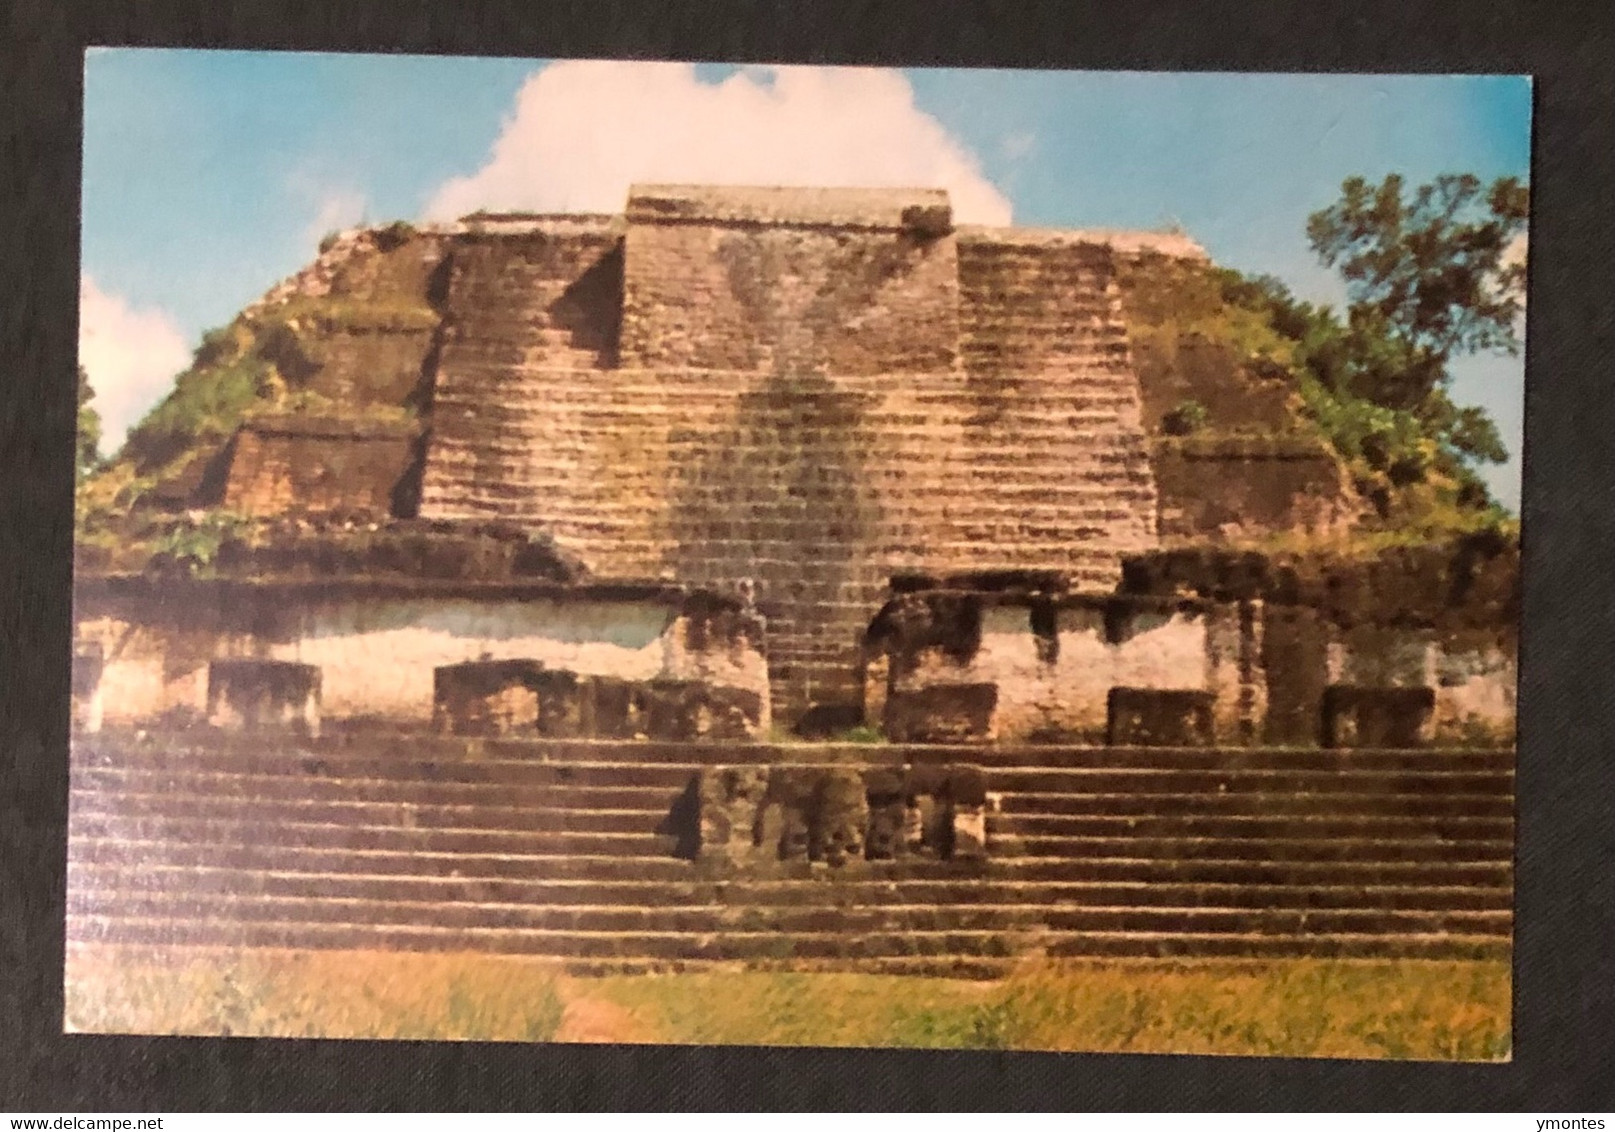 Postcard Belize, Altun Ha1971 - Belize